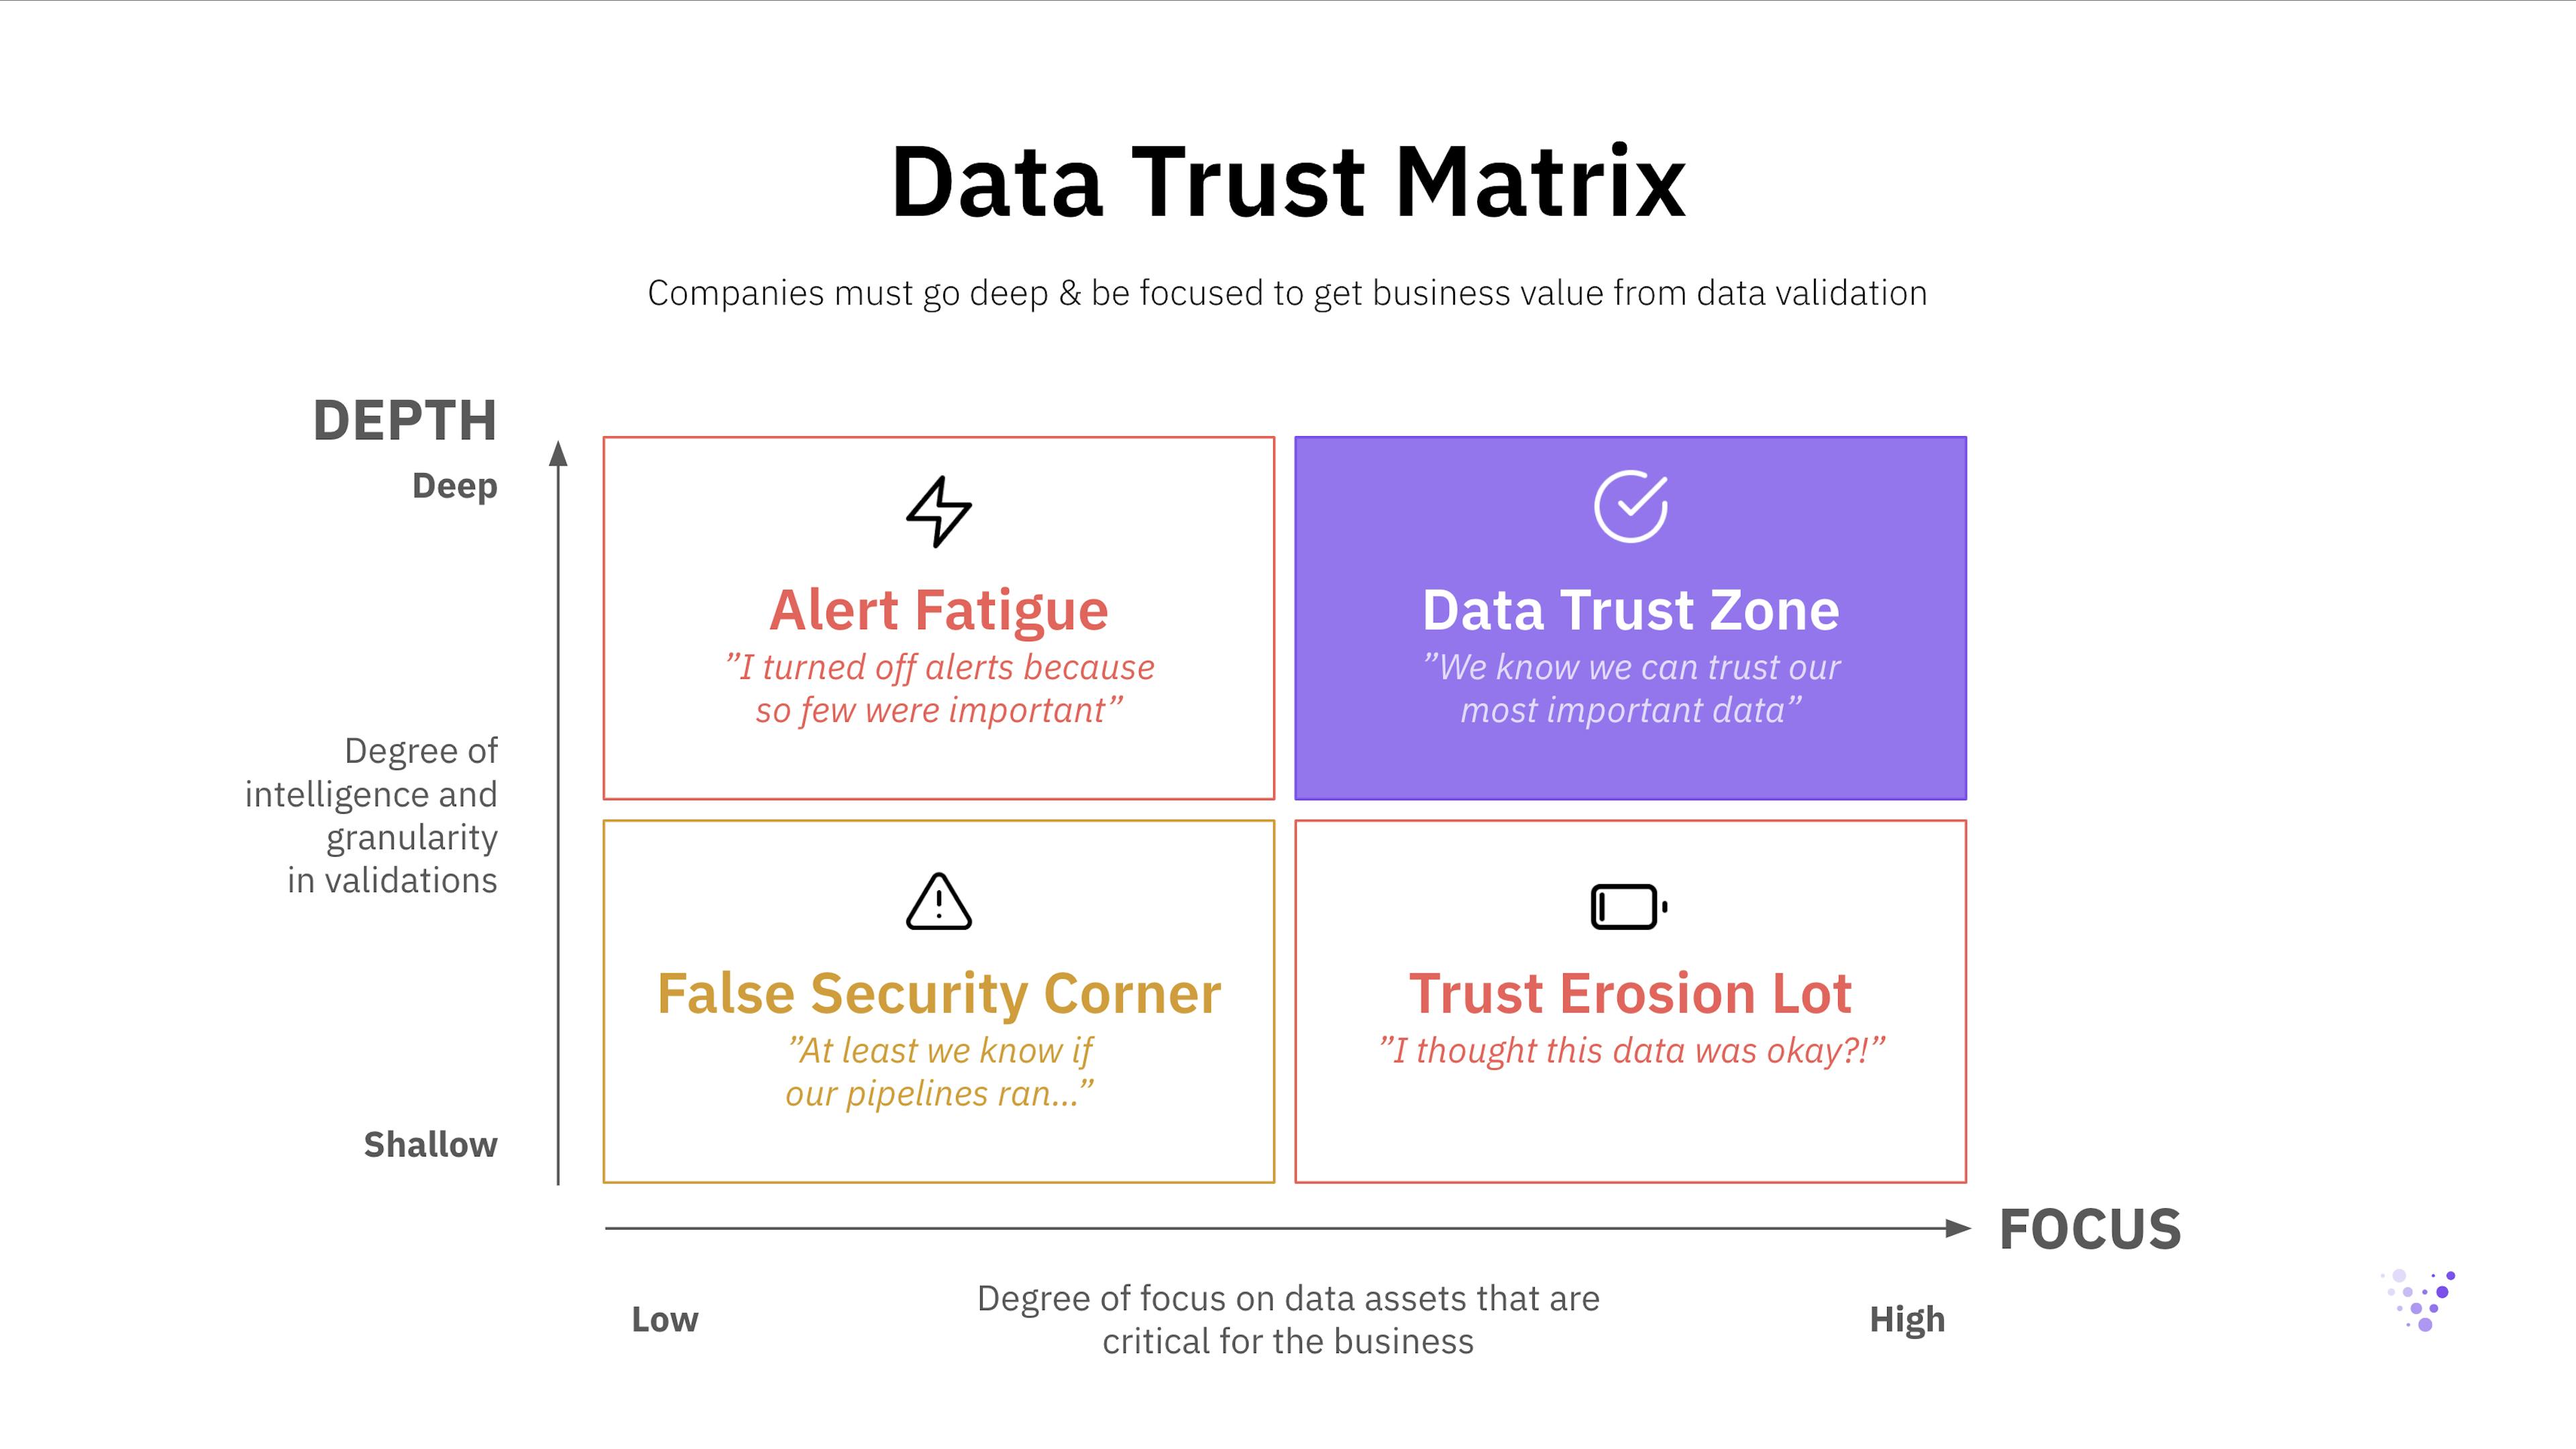 Data Trust Matrix overview: Data Trust Zone highlighted